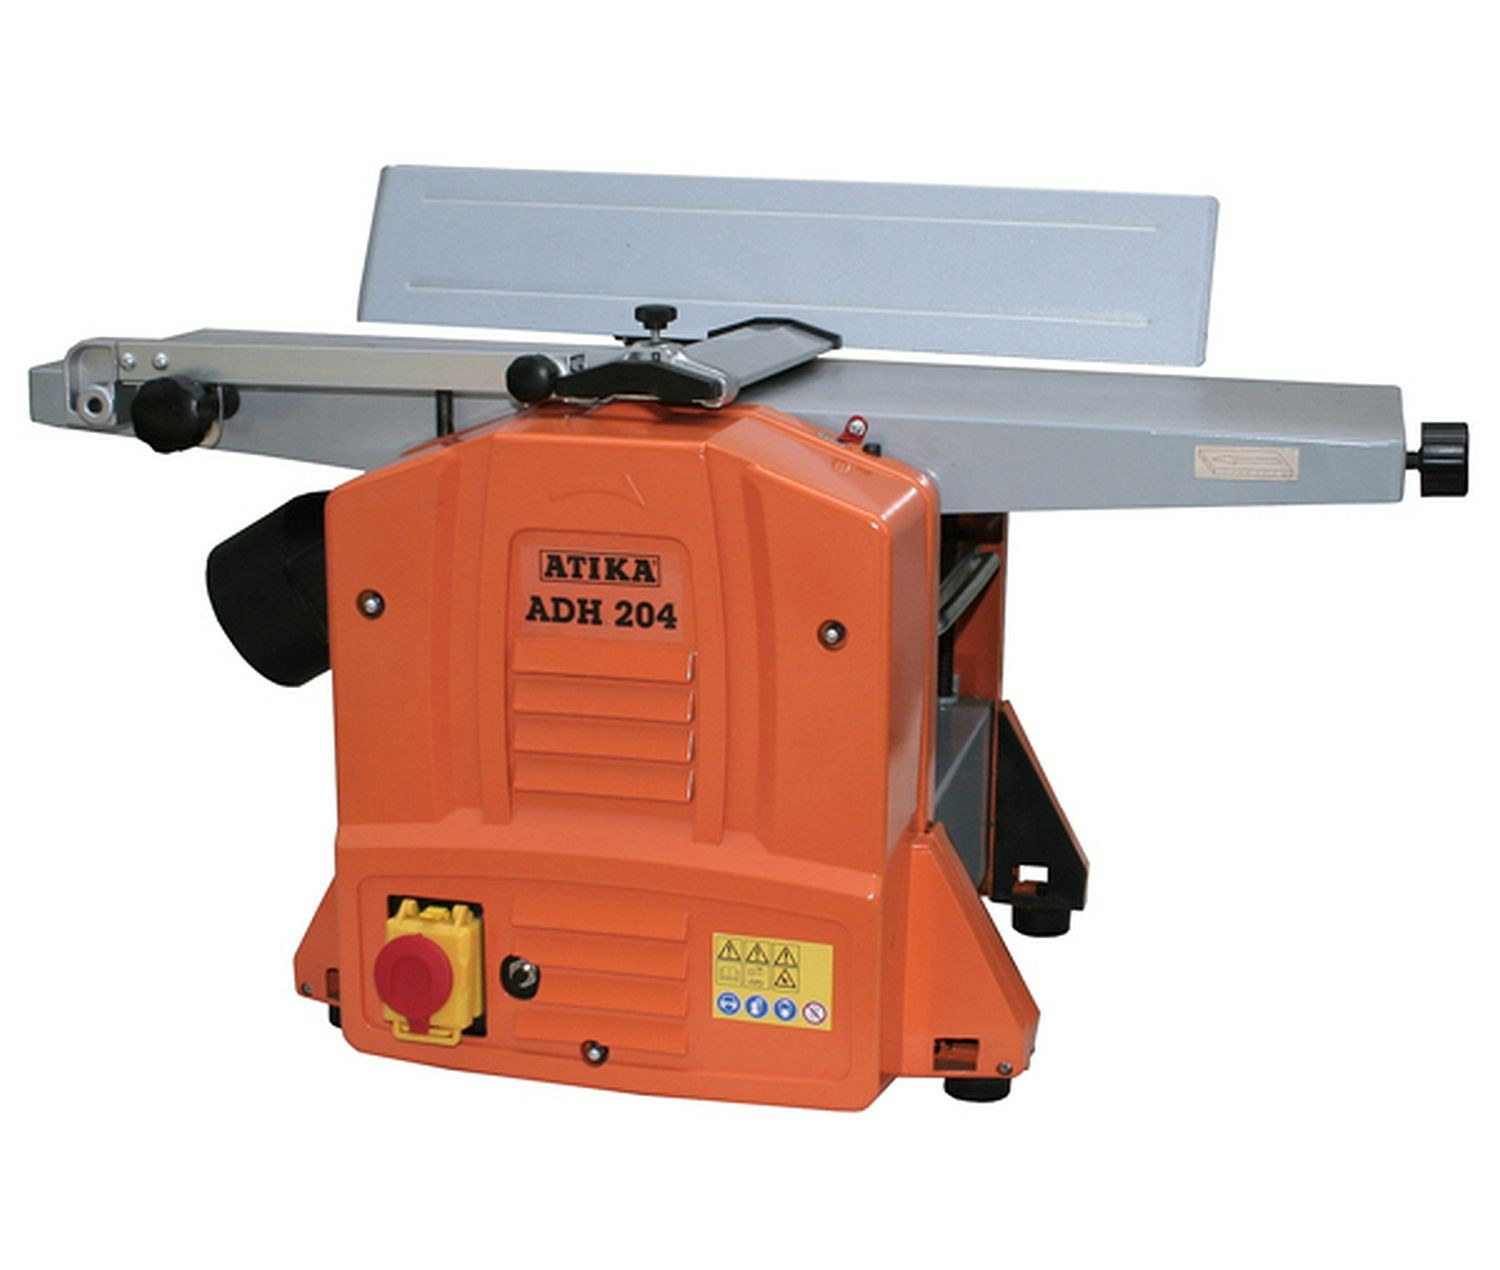 Abrichthobel Dickenhobel Atika ADH 204 kompakte und preiswerte Hobelmaschine zur Holzbearbeitung